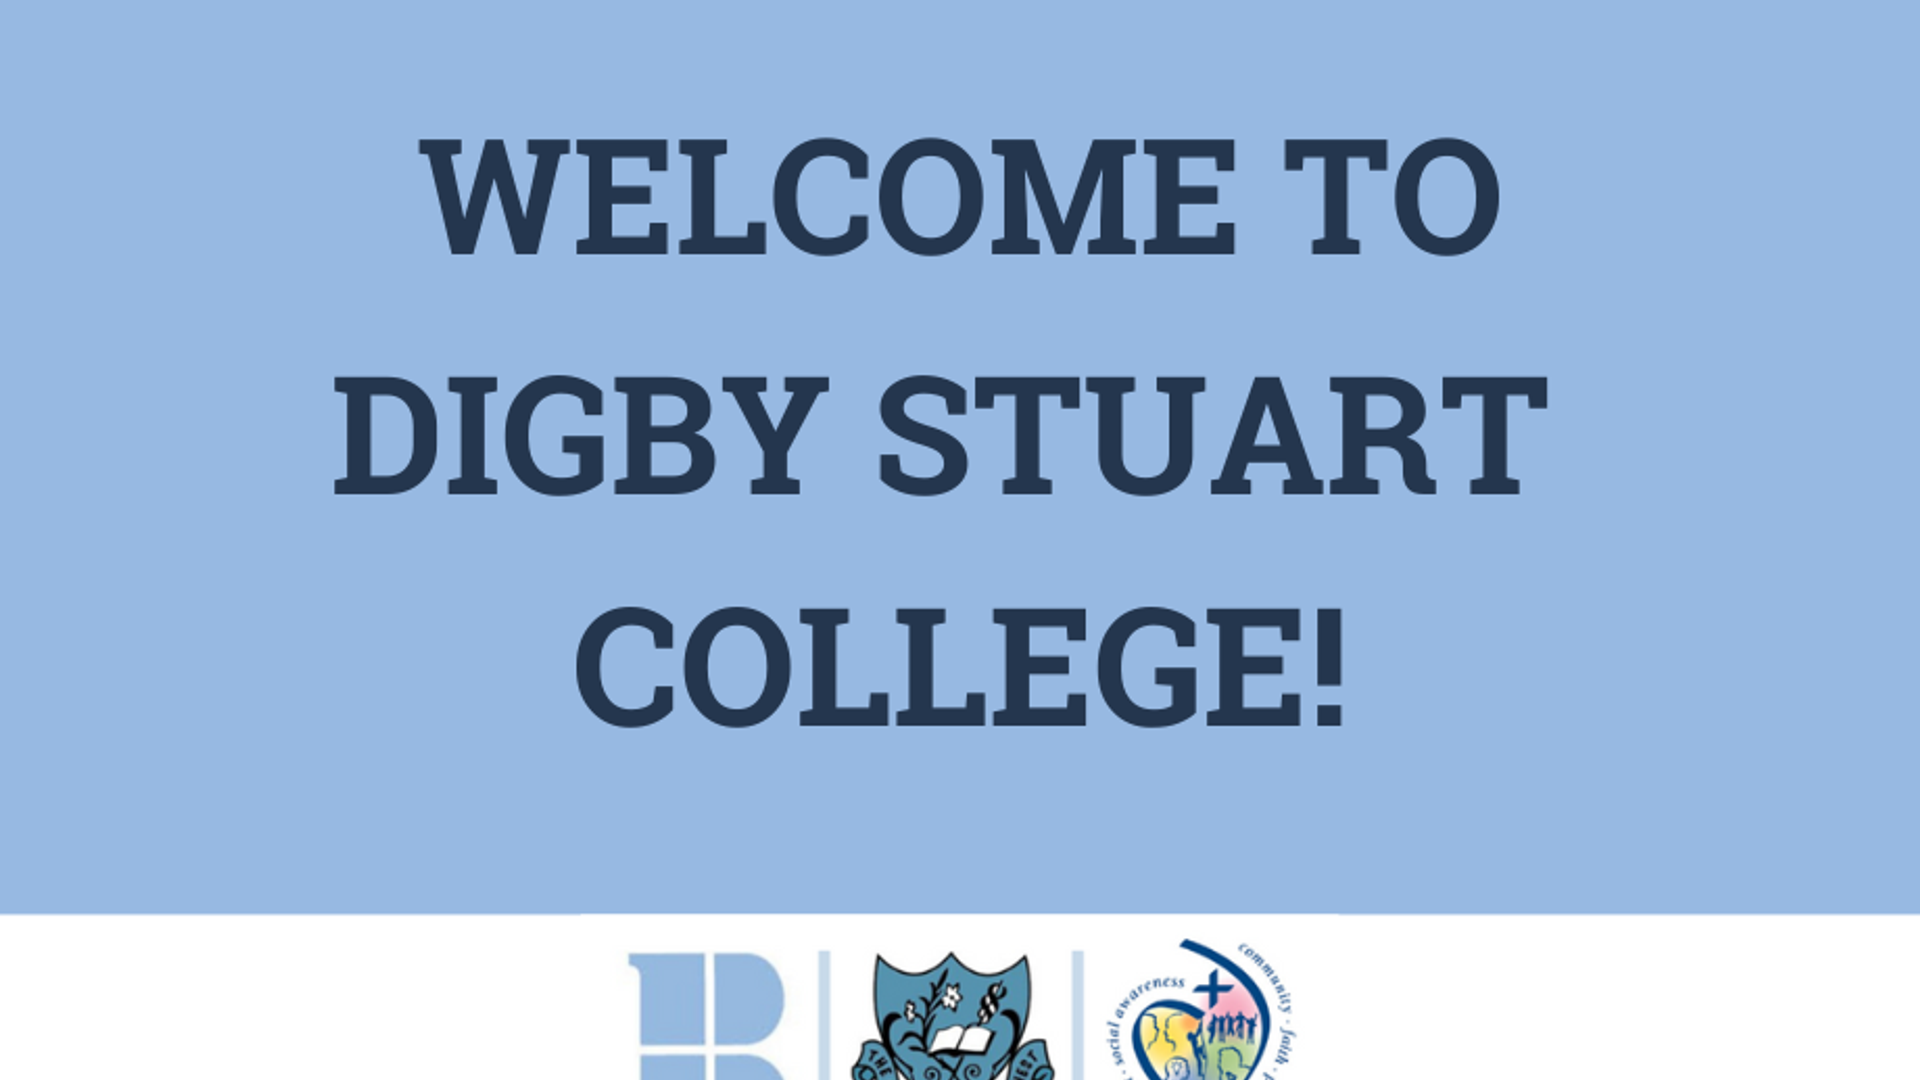 Digby Stuart College